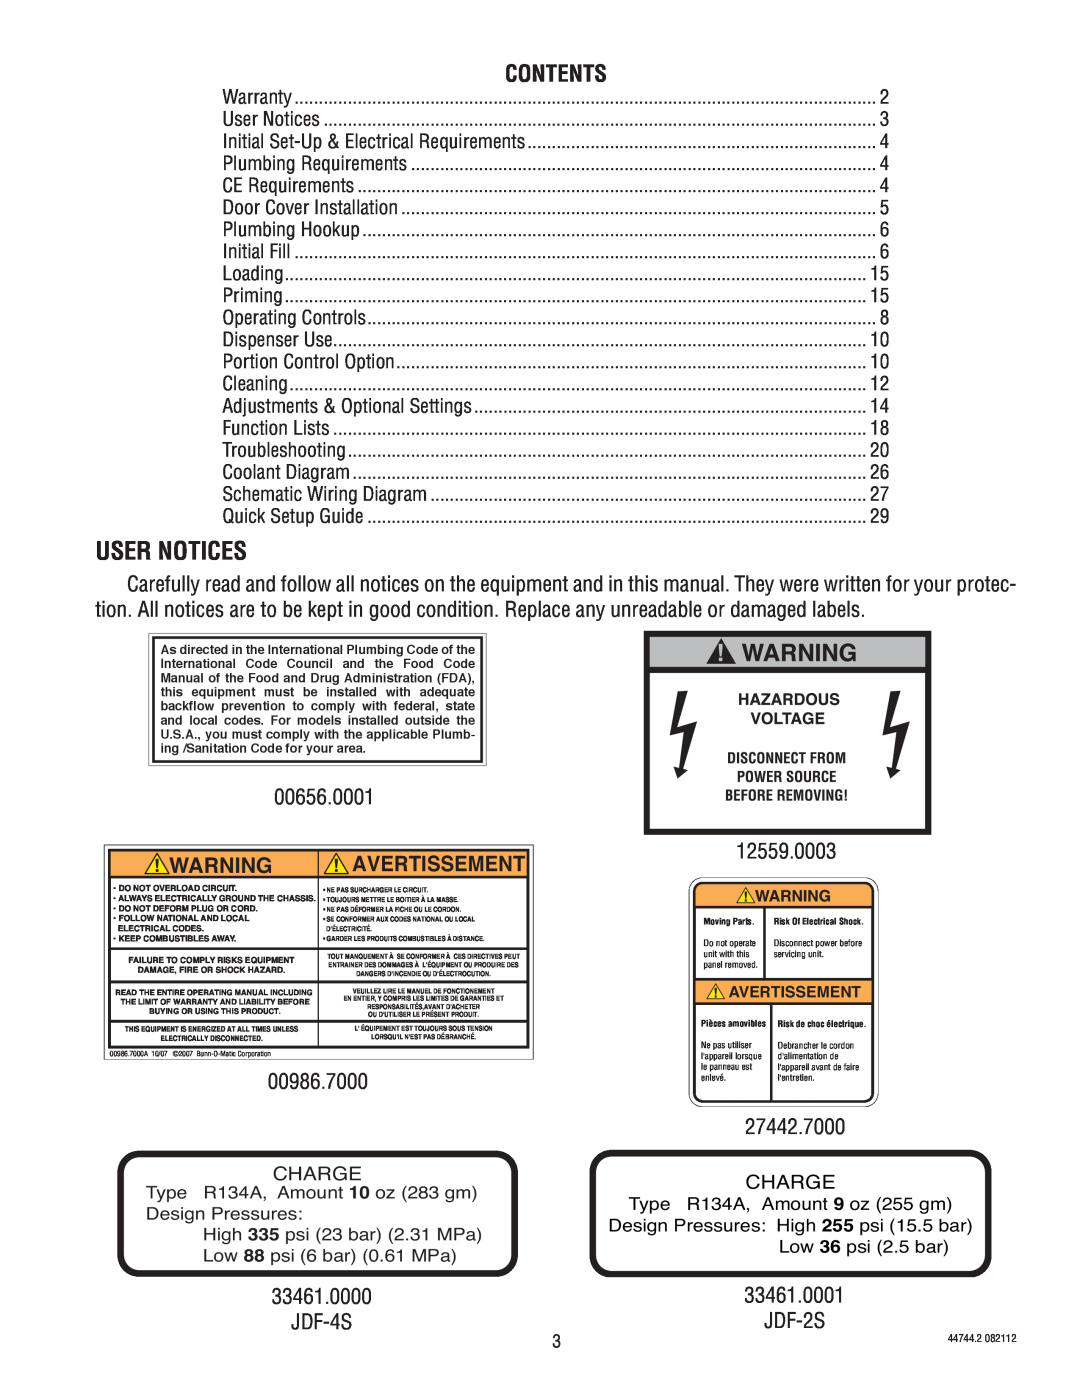 Bunn JDF-4S service manual User Notices, Warning Avertissement, Contents 